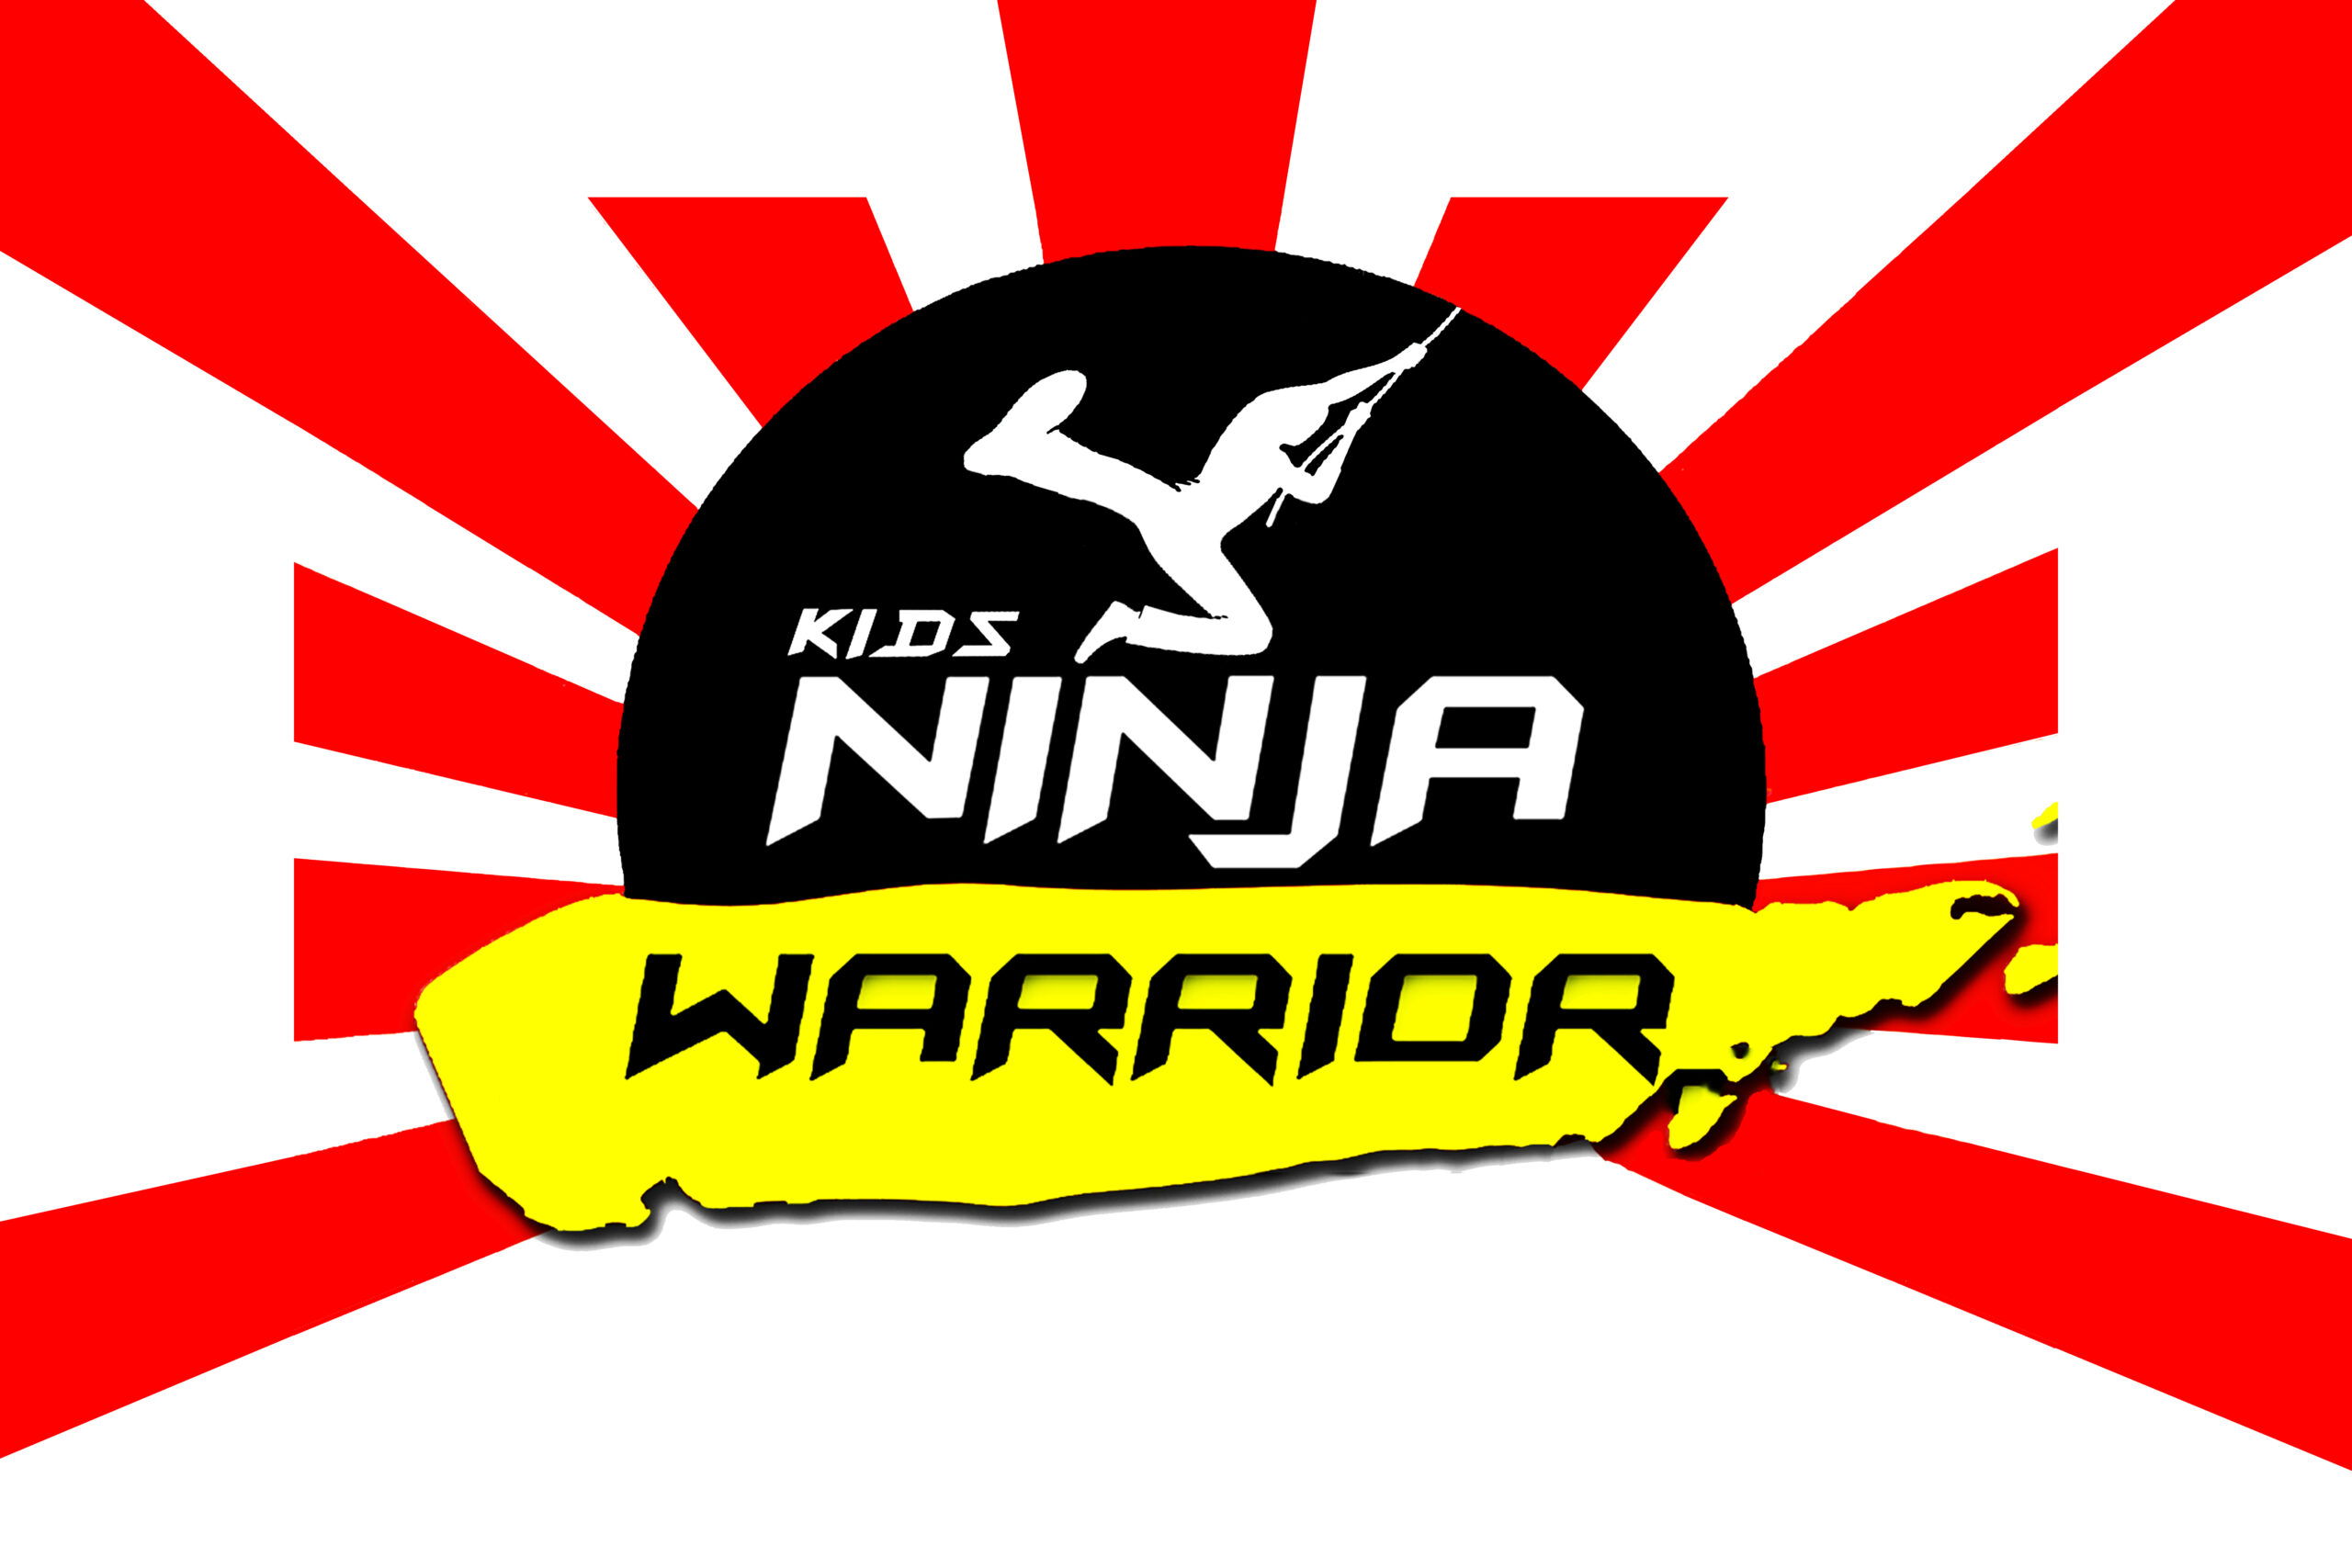 Kids Ninja Warrior!